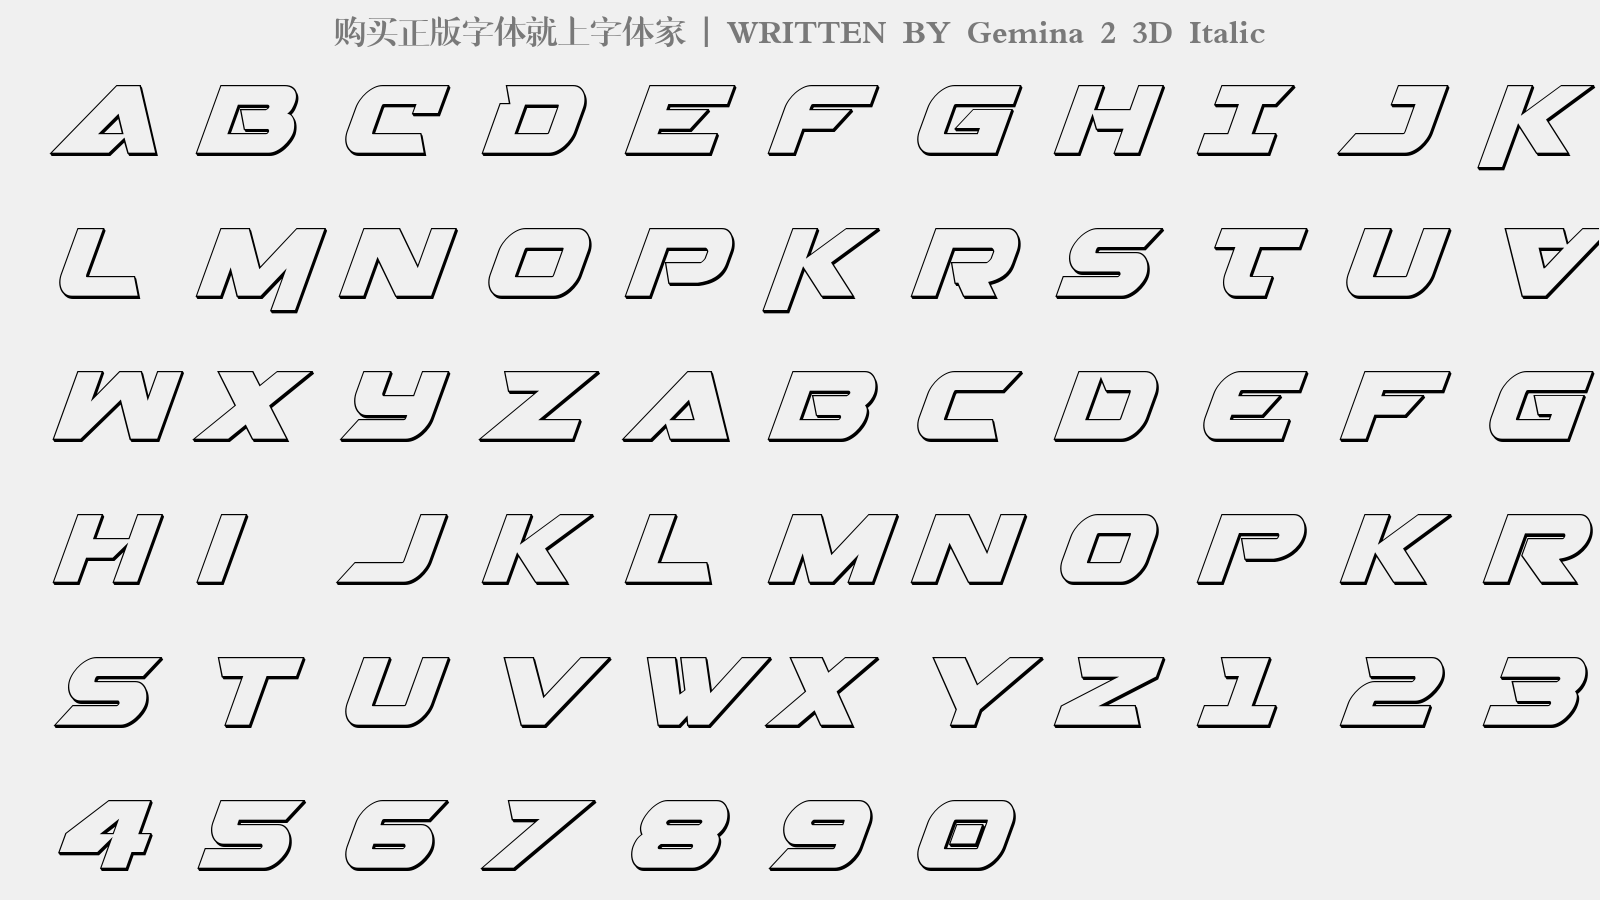 Gemina 2 3D Italic - 大写字母/小写字母/数字